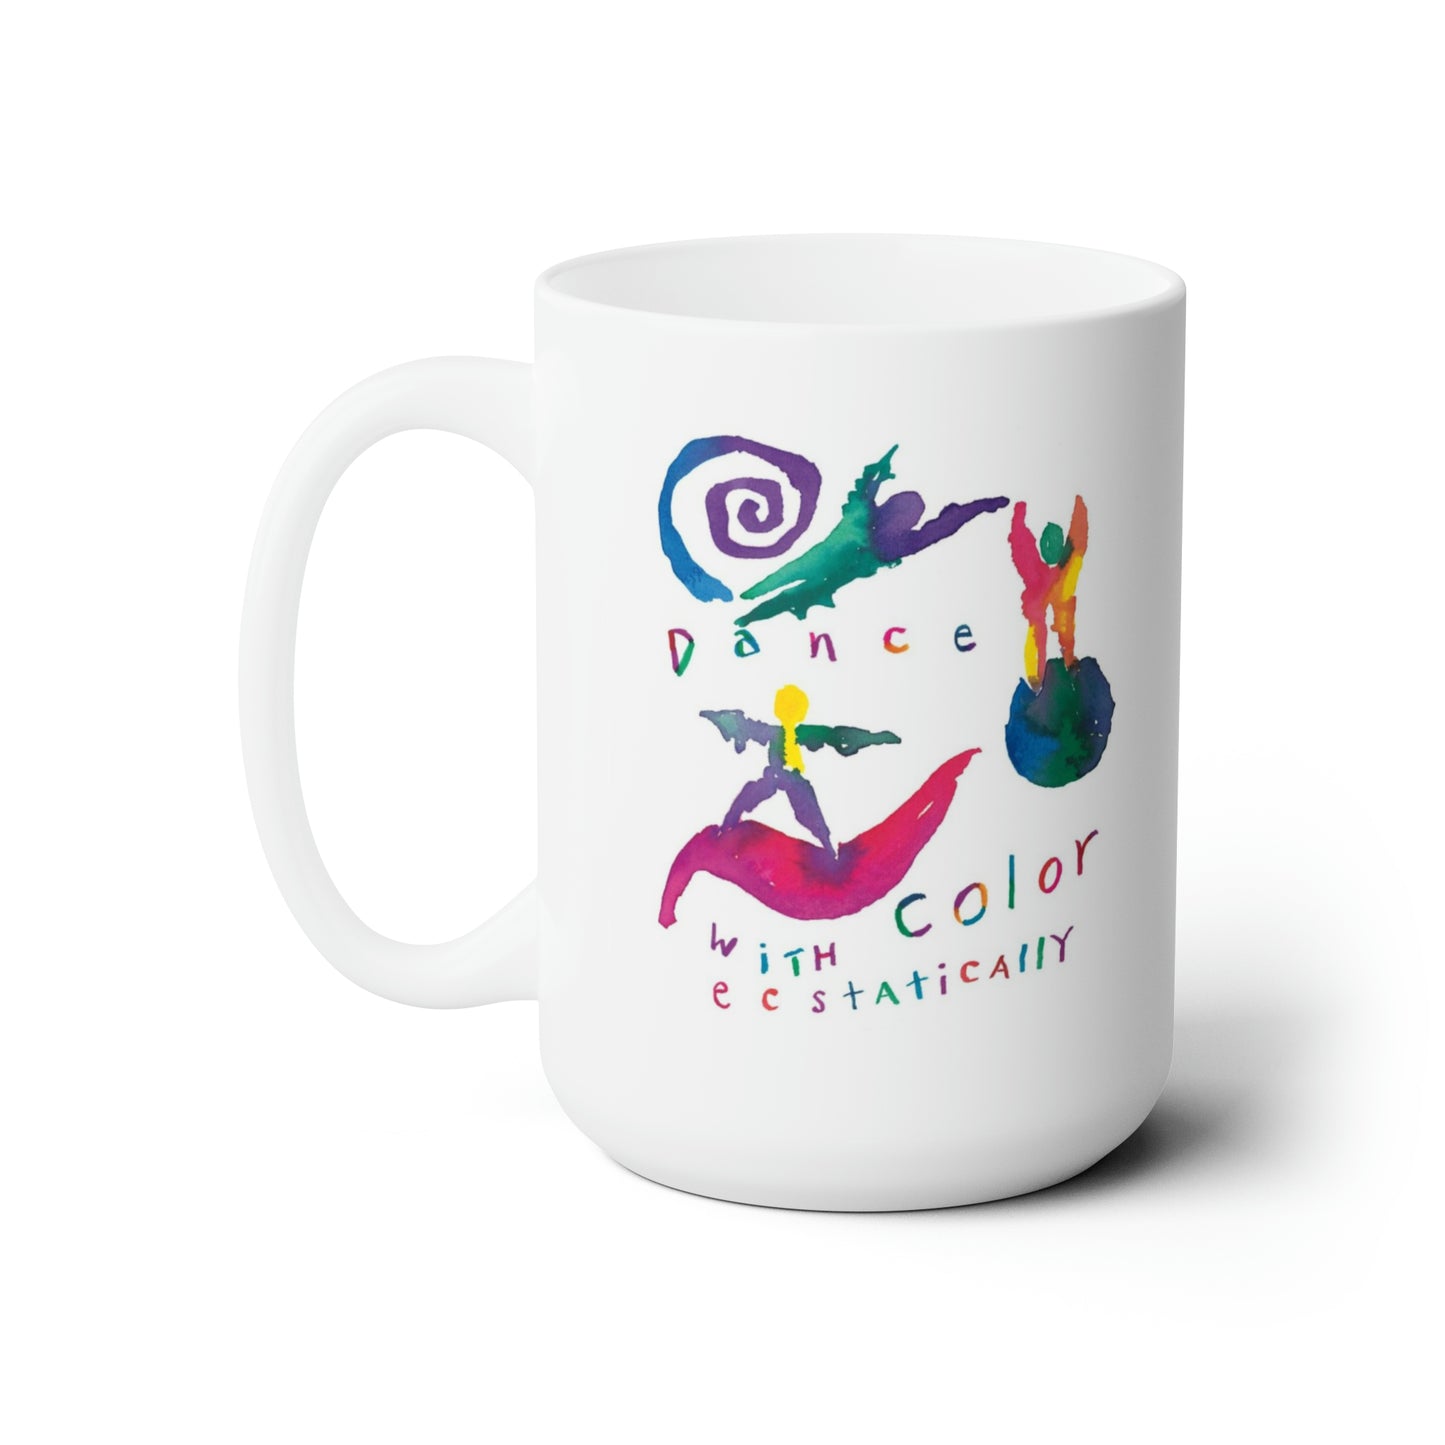 Dance With Color Ecstatically by SARK - White Ceramic Mug